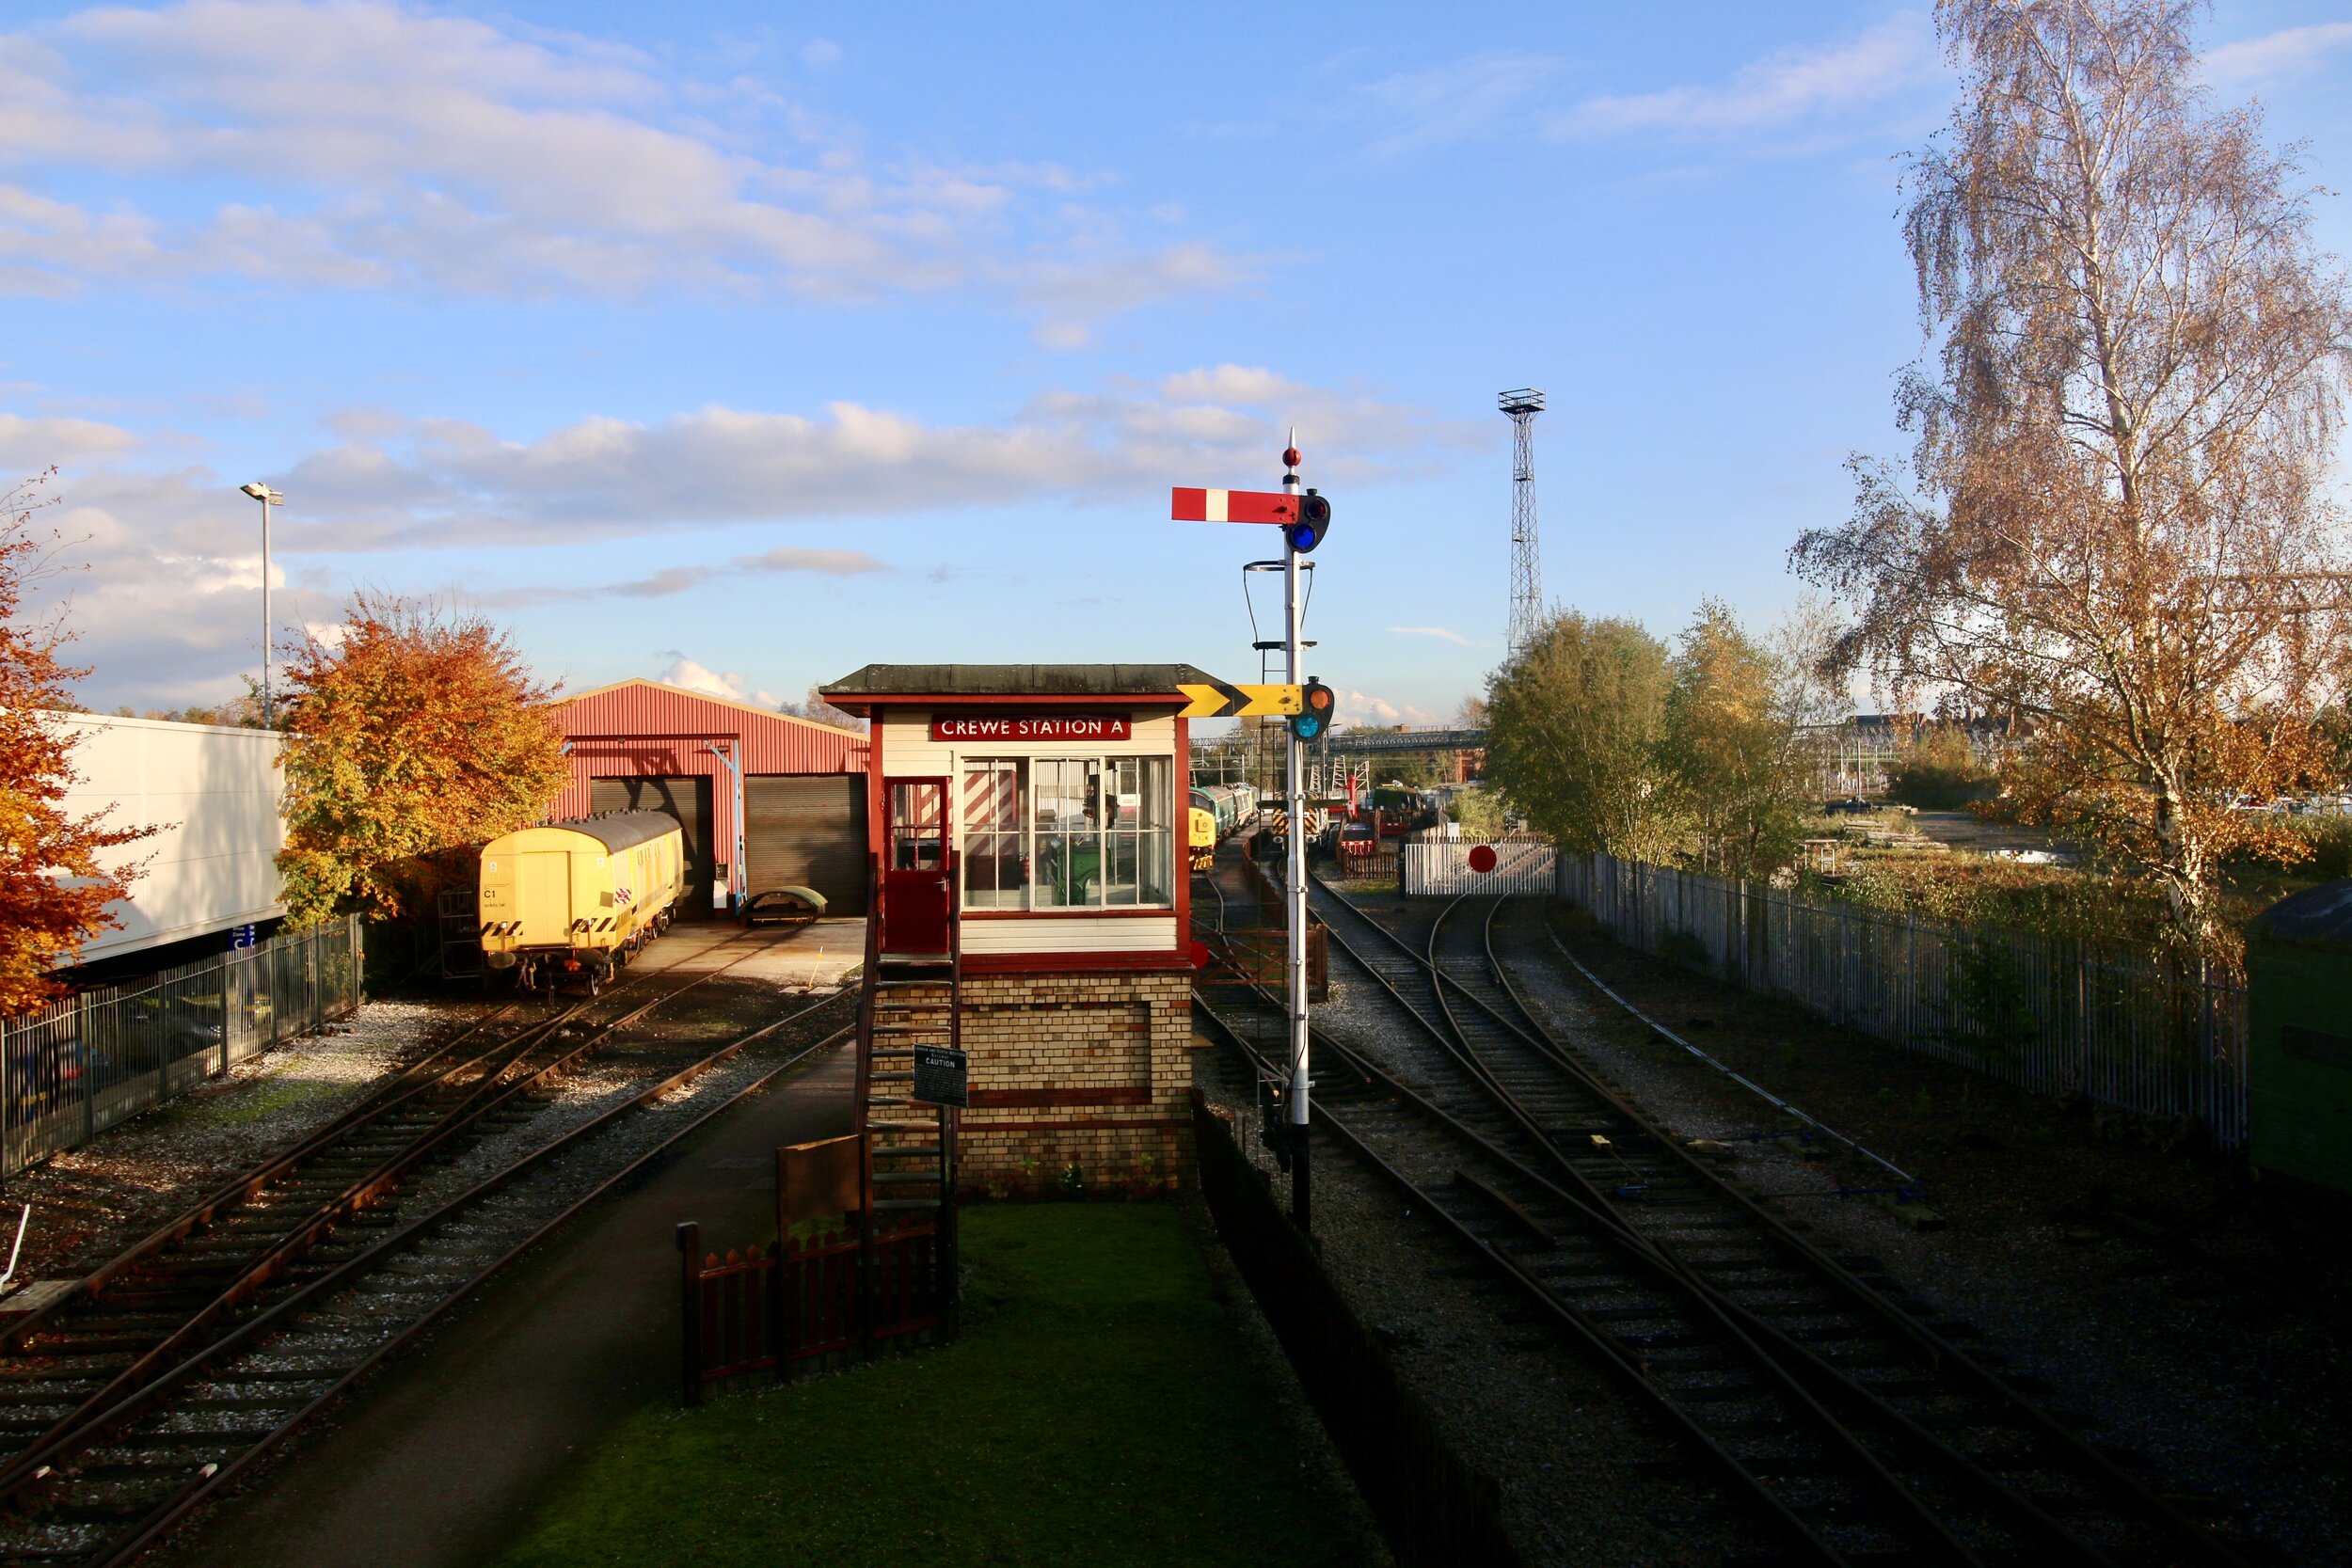 Crewe Station A Signal Box